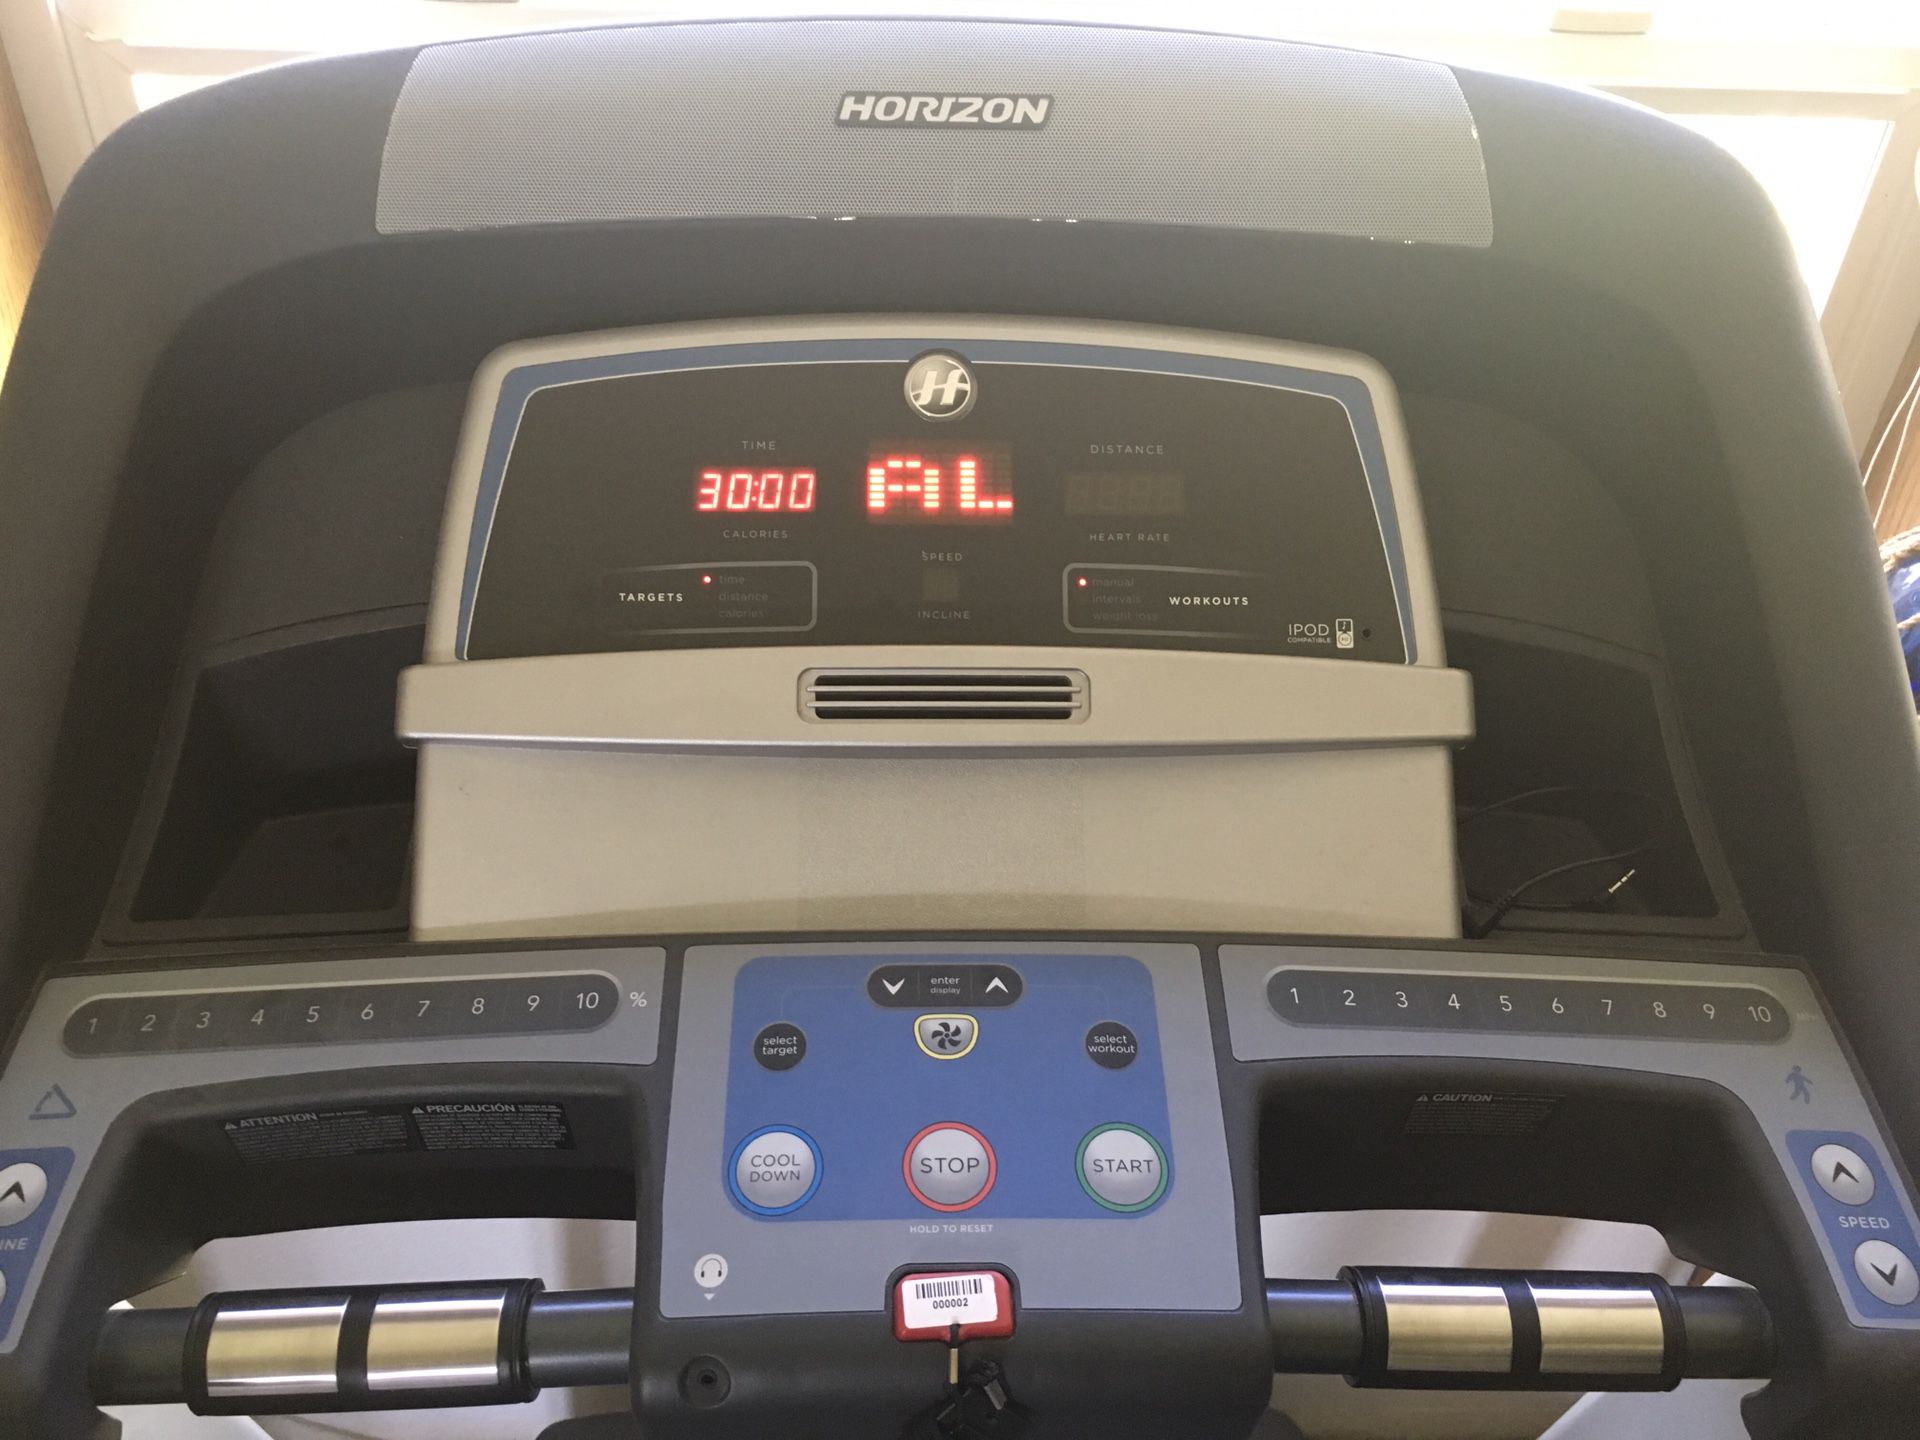 Horizon T101 Treadmill with incline $400.00